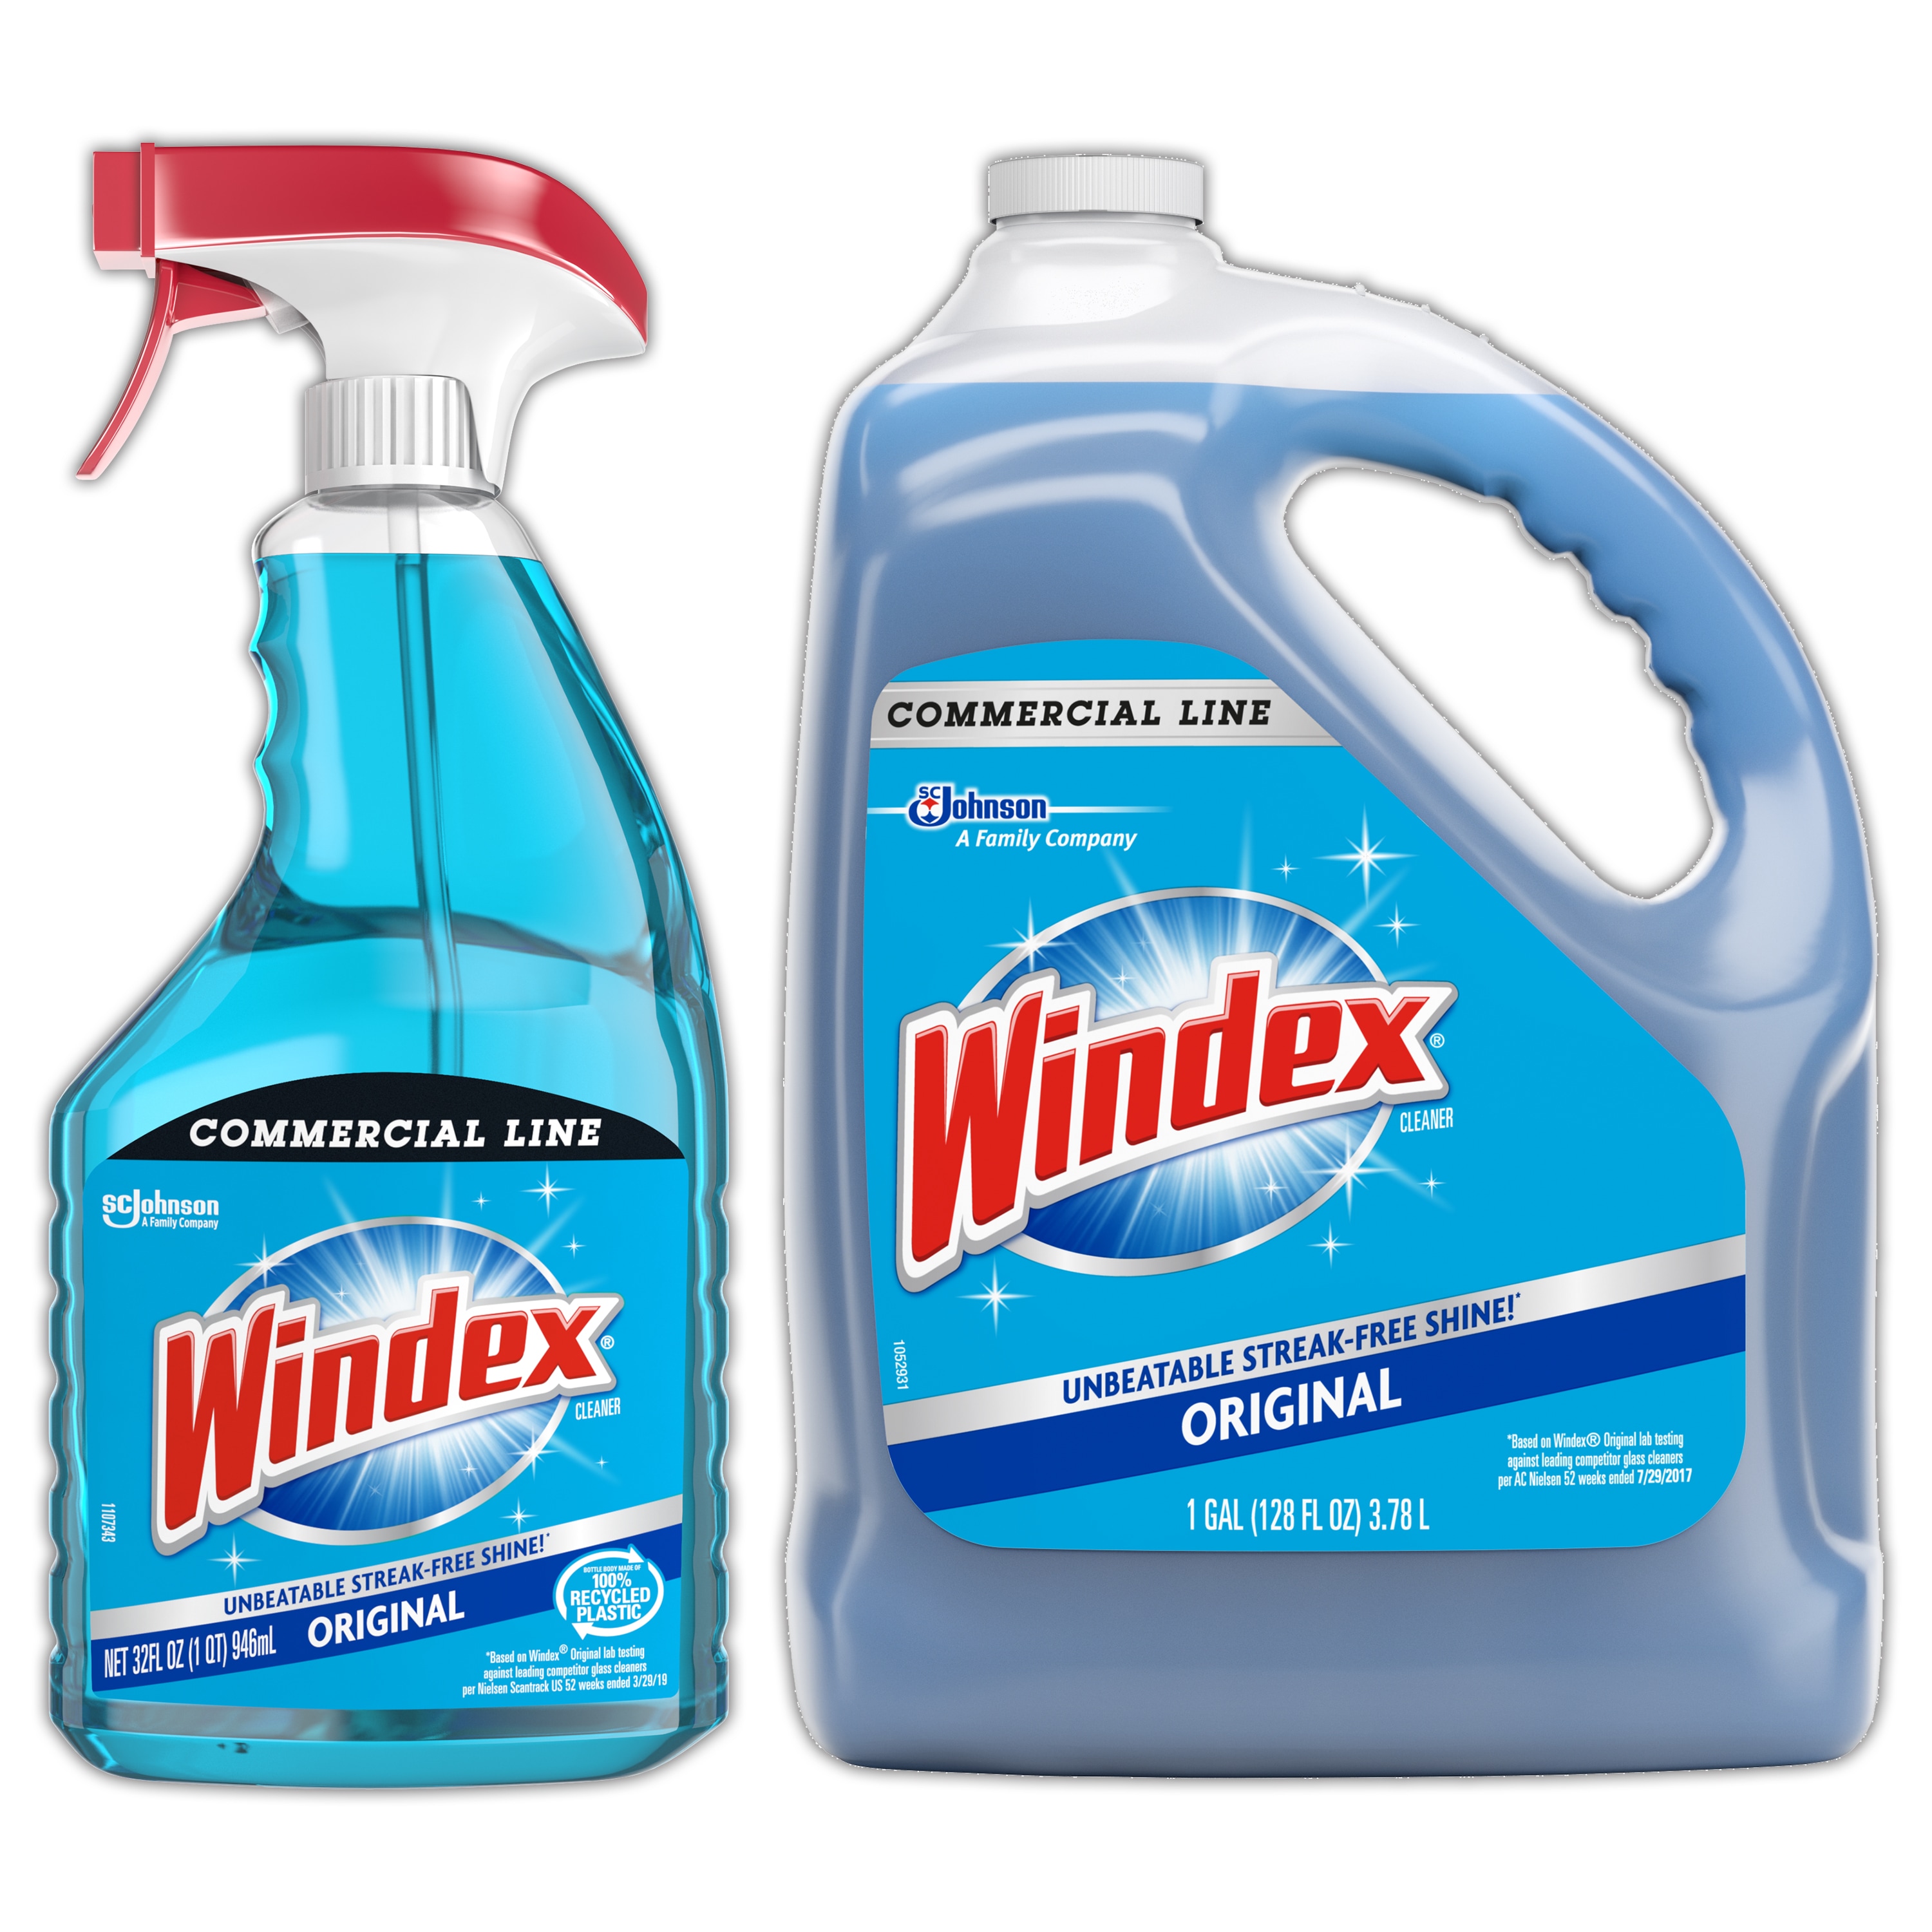 Chemical Guys Streak Free Window / Glass cleaner VS Windex, Plus a